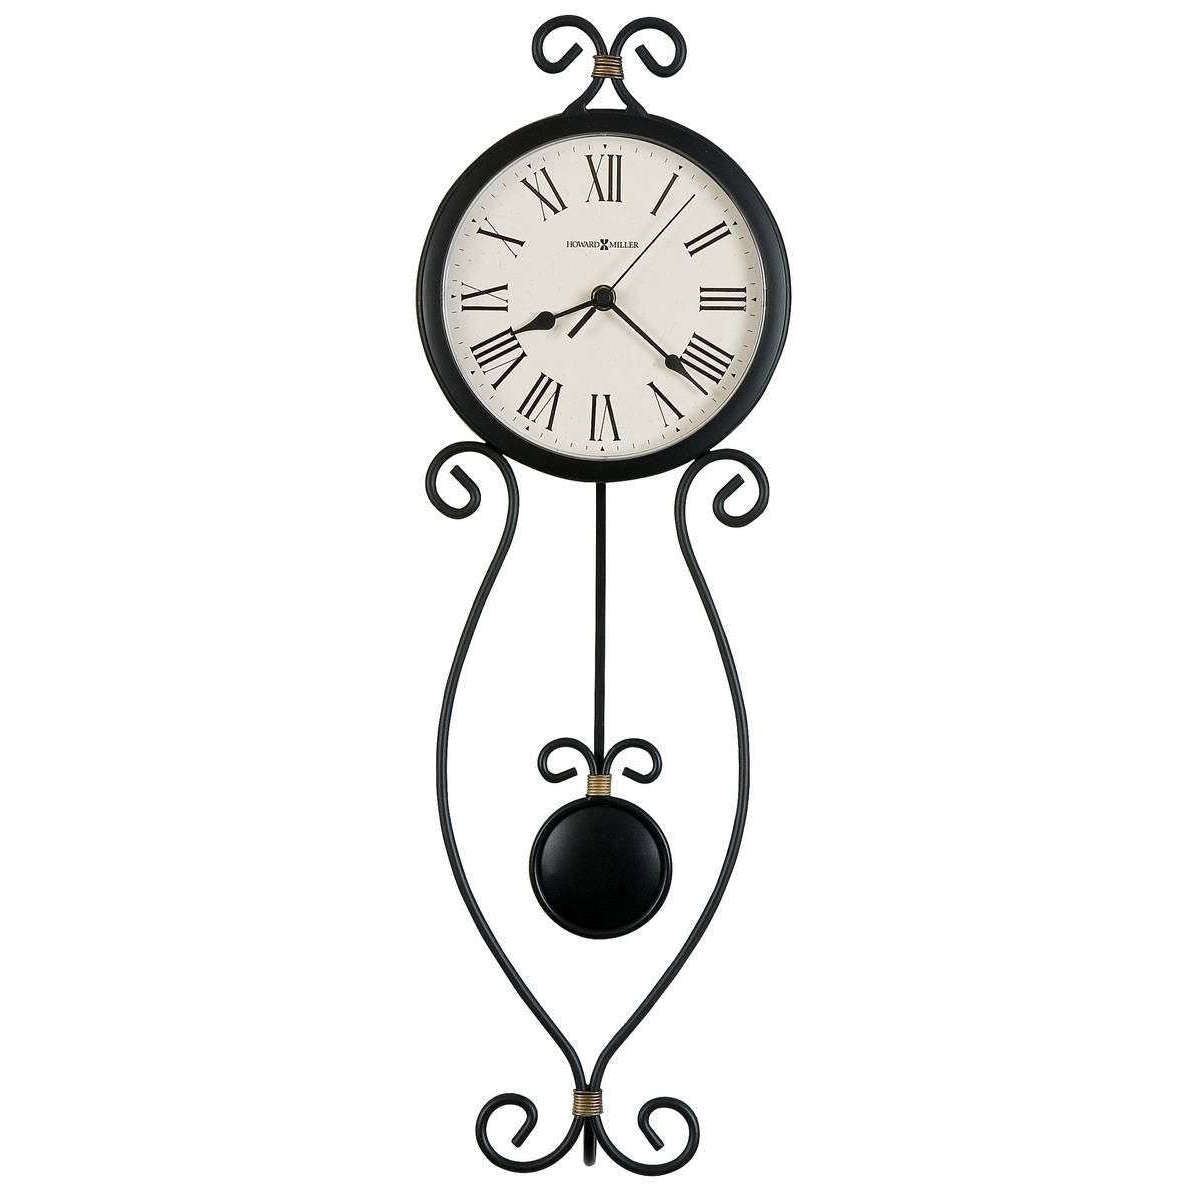 Howard Miller Ivana Wall Clock - Antique Black